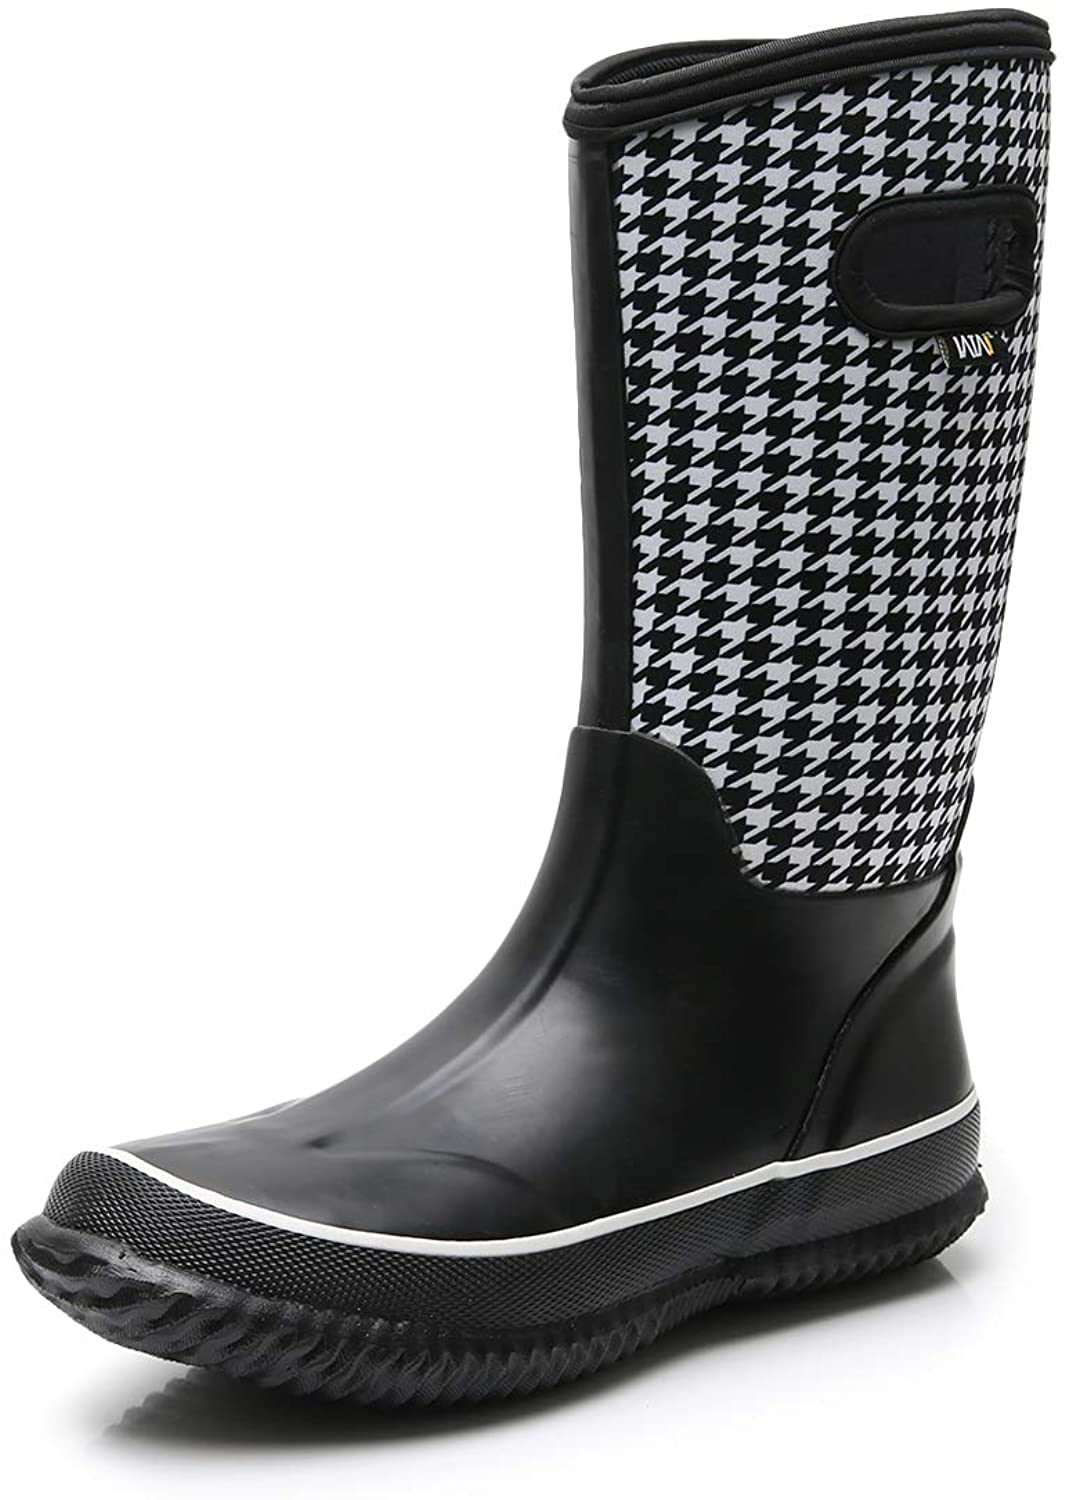 WTW Womens Rubber Neoprene Snow Boots Winter Warm Waterproof Insulated Barn Rain Boots for Ladies 